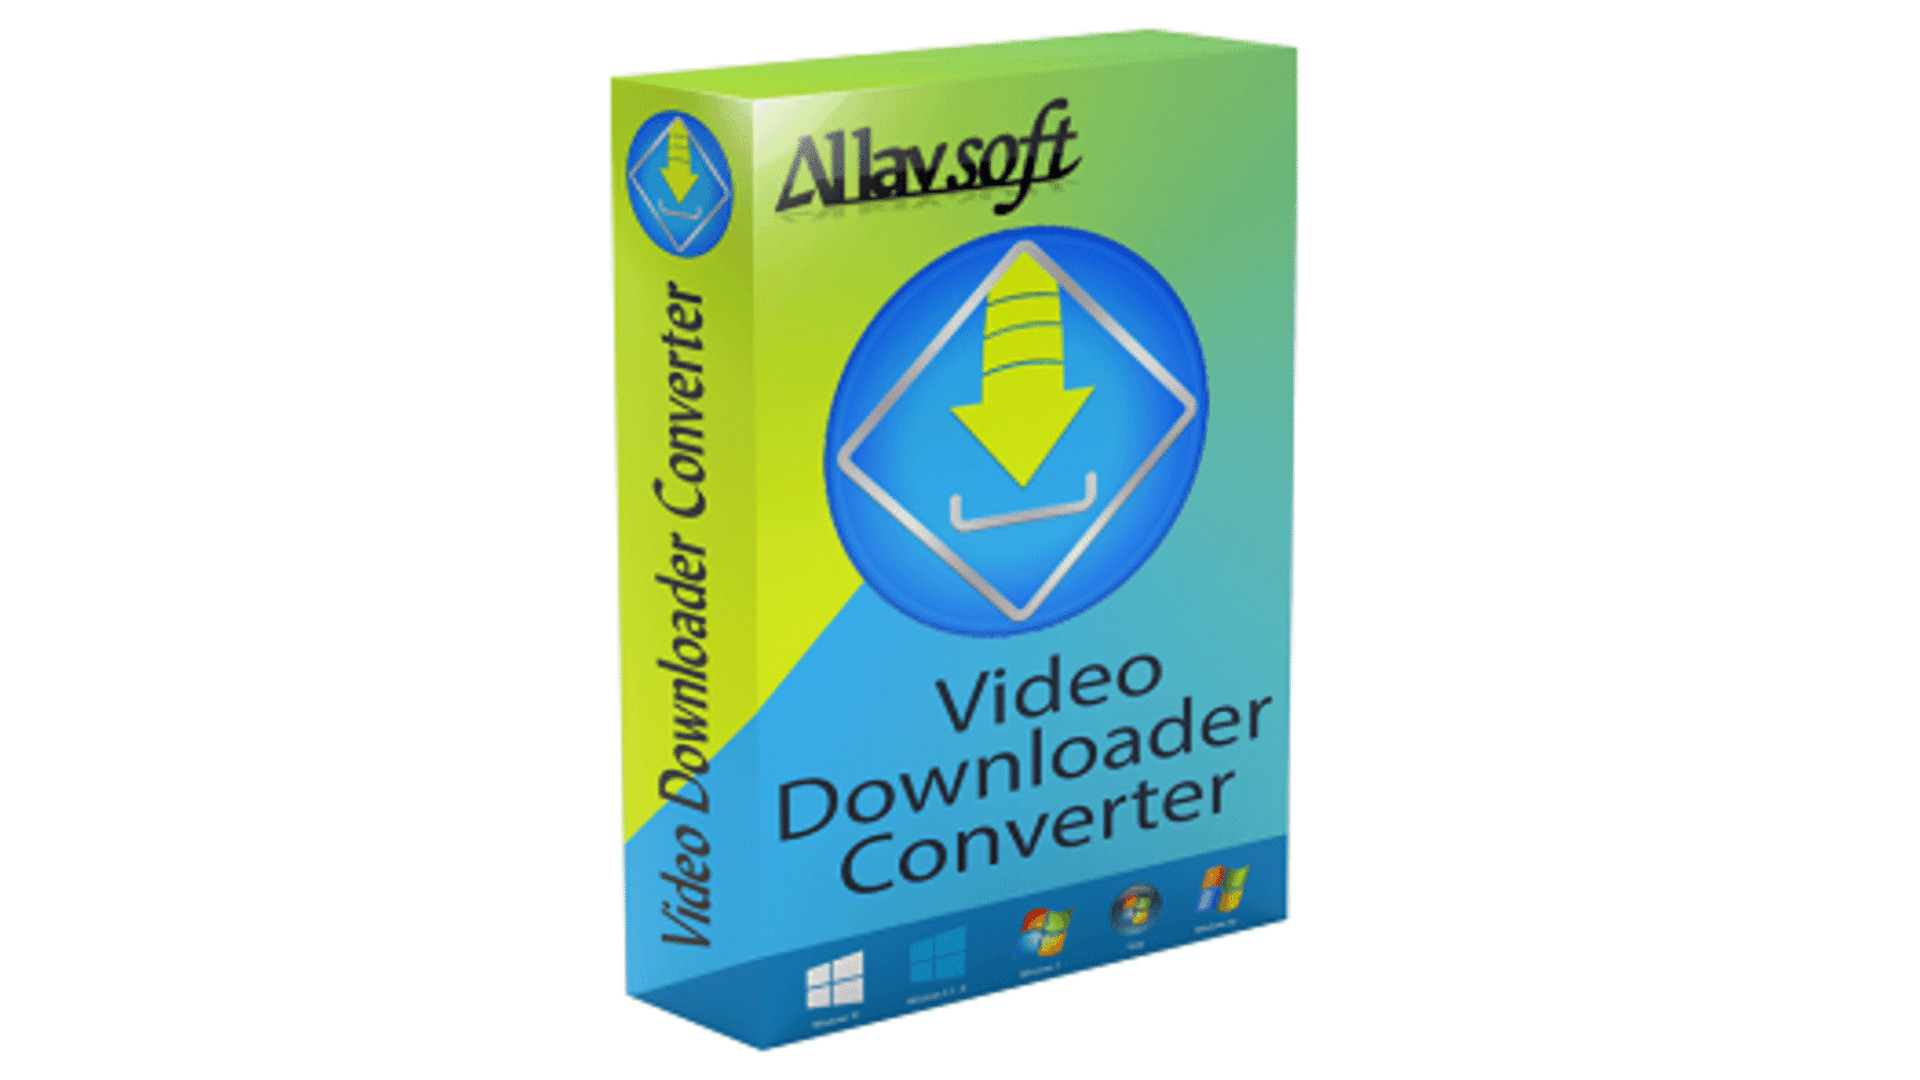 Allavsoft Video Downloader and Converter for Windows CD Key, 2.75$